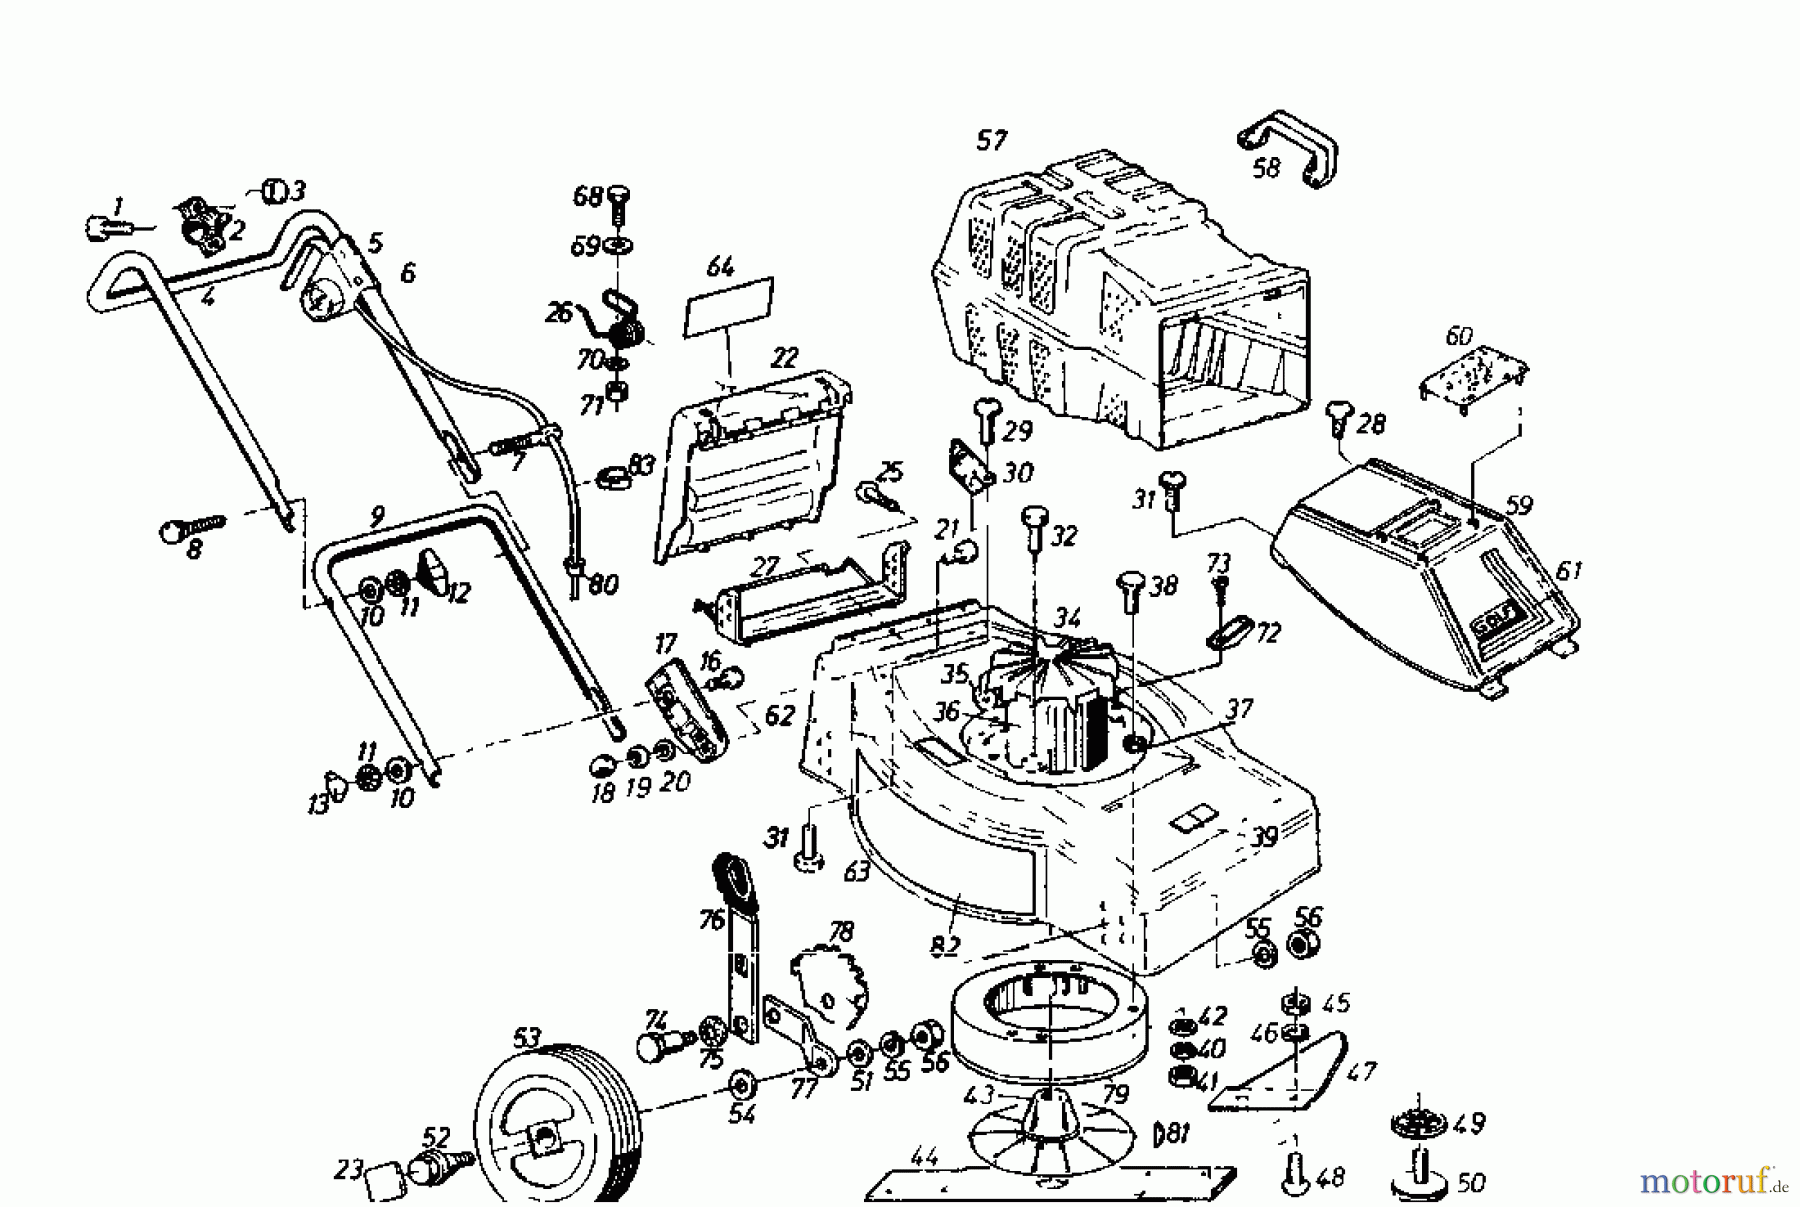  Golf Electric mower 345 HLES 02841.03  (1987) Basic machine